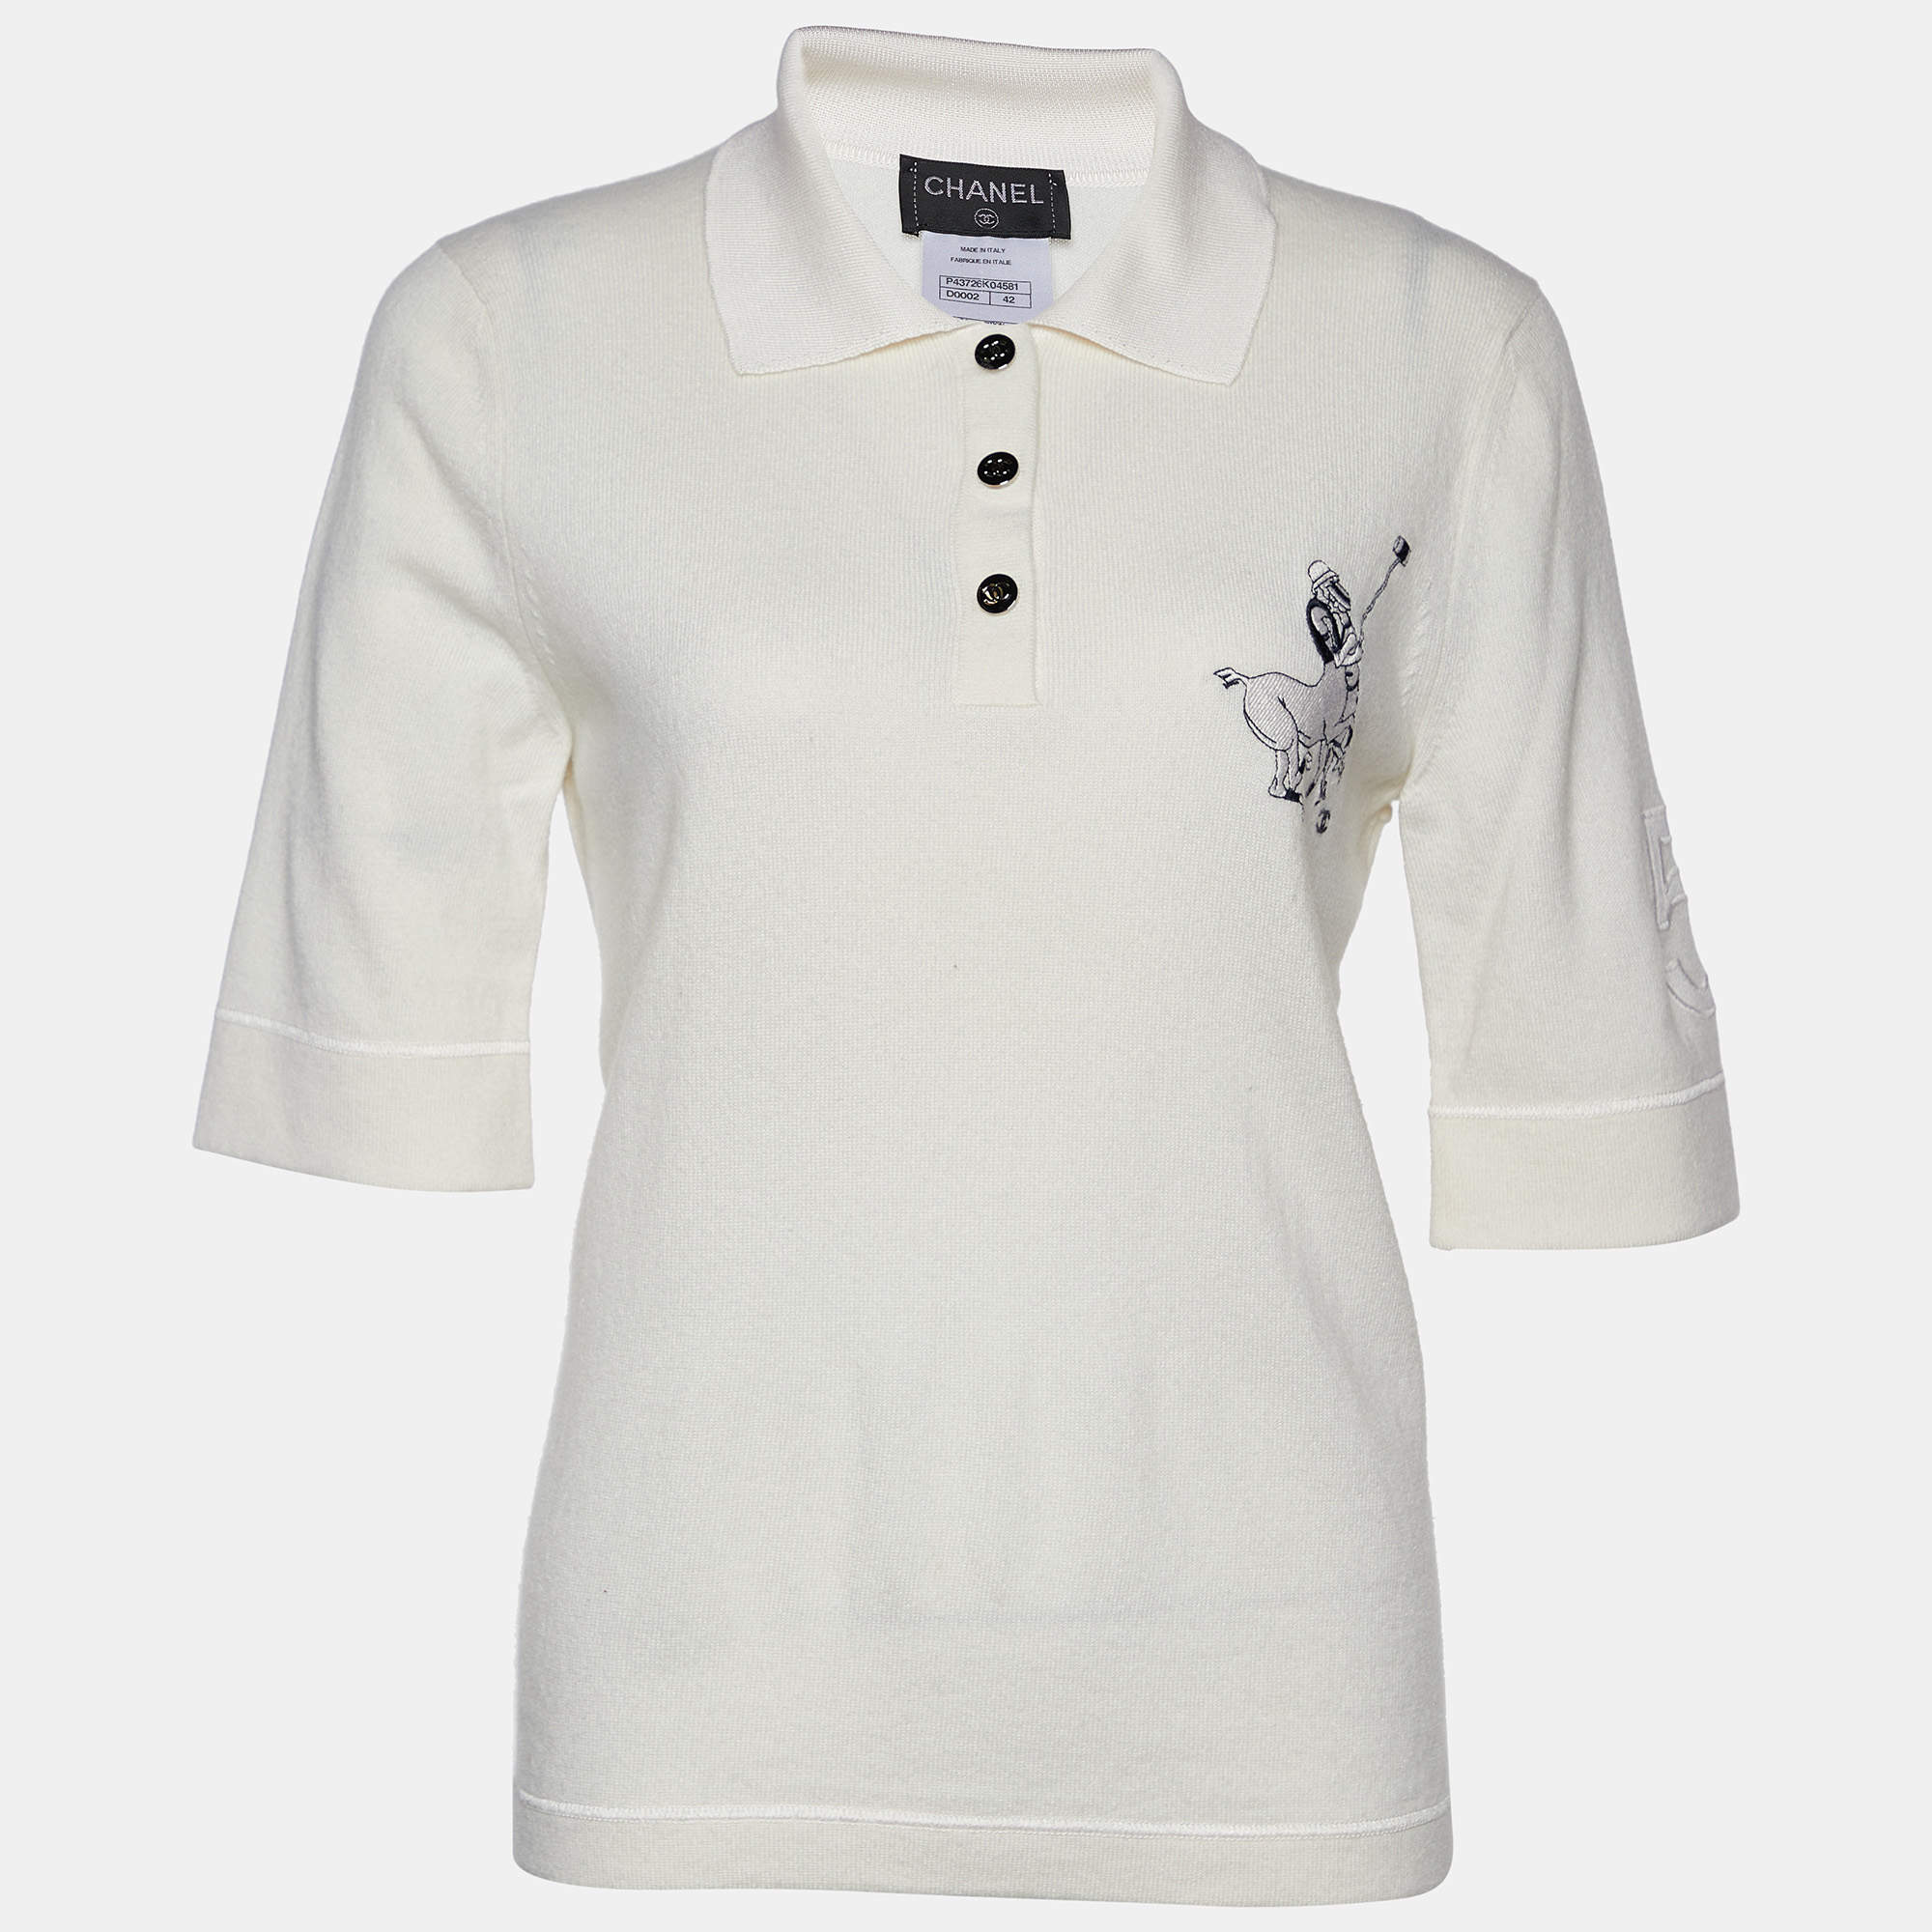 Chanel Cream Embroidered Cashmere Polo T-Shirt L